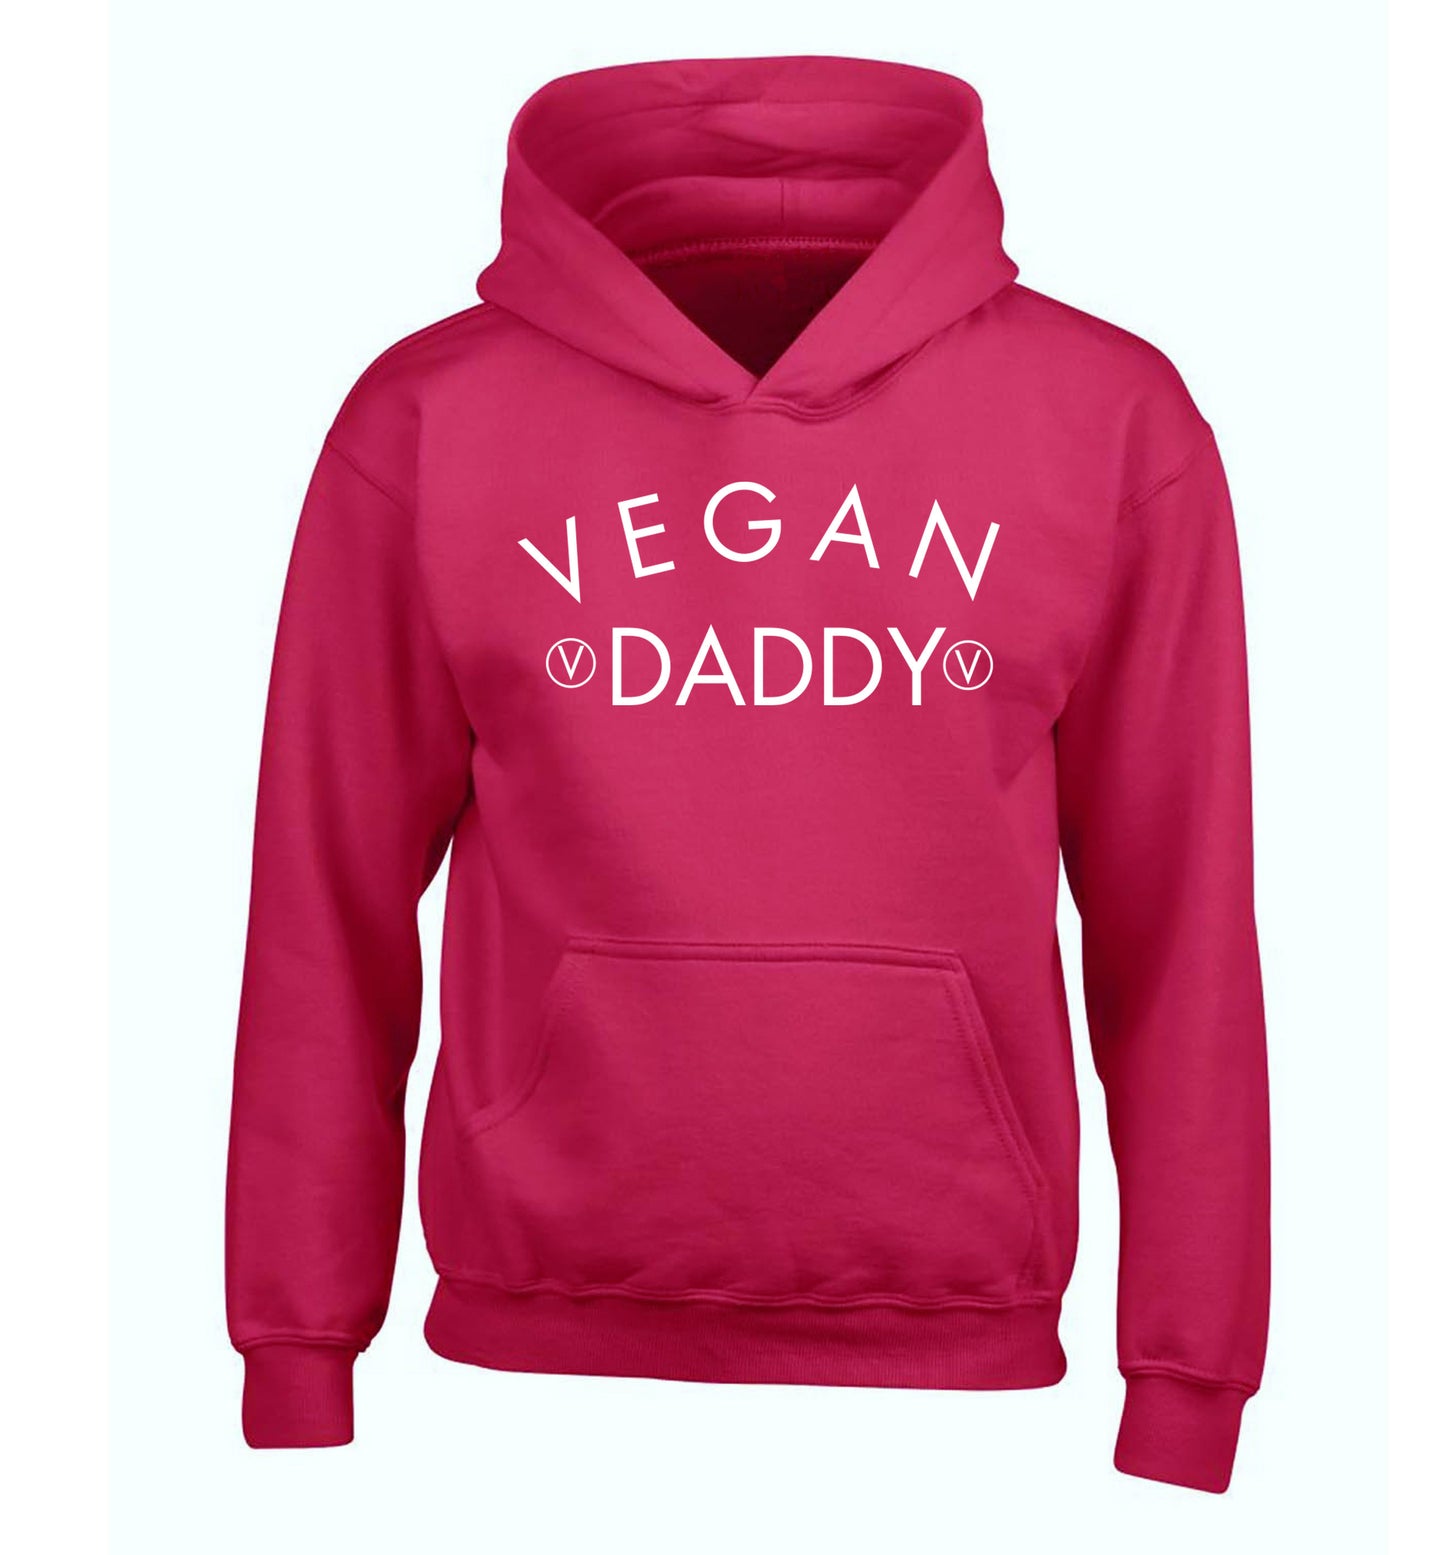 Vegan daddy children's pink hoodie 12-14 Years